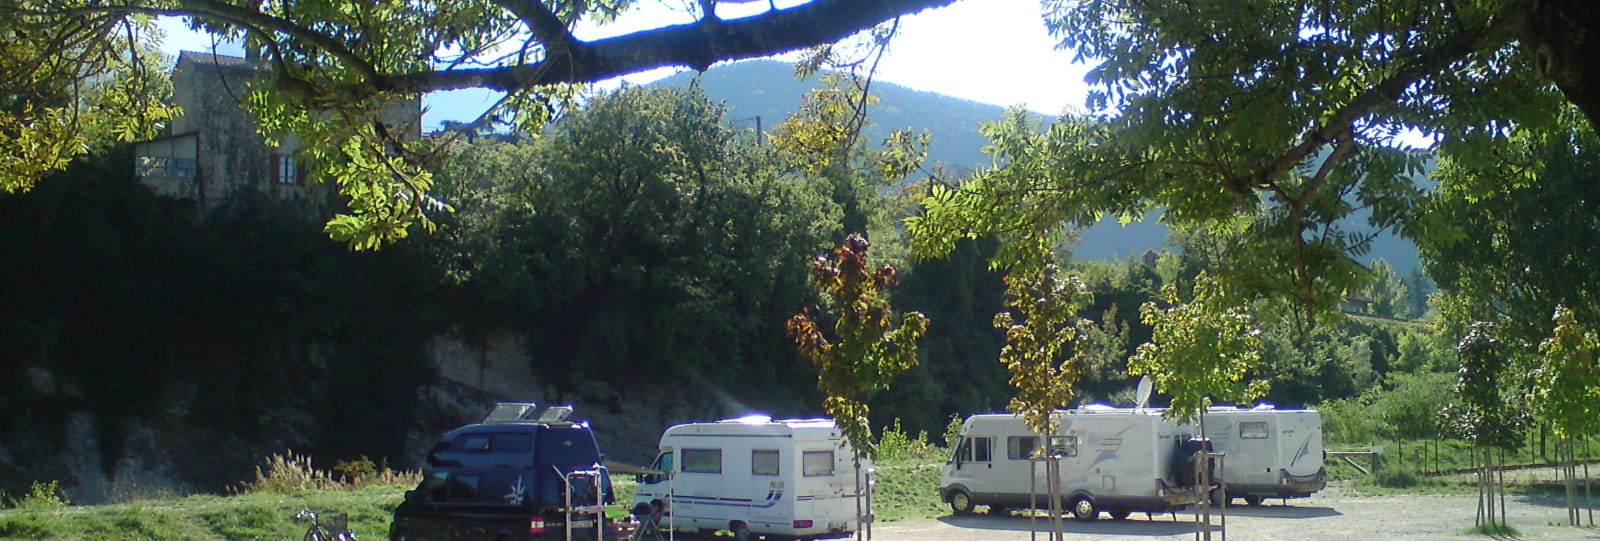 Aire de service Camping-Cars